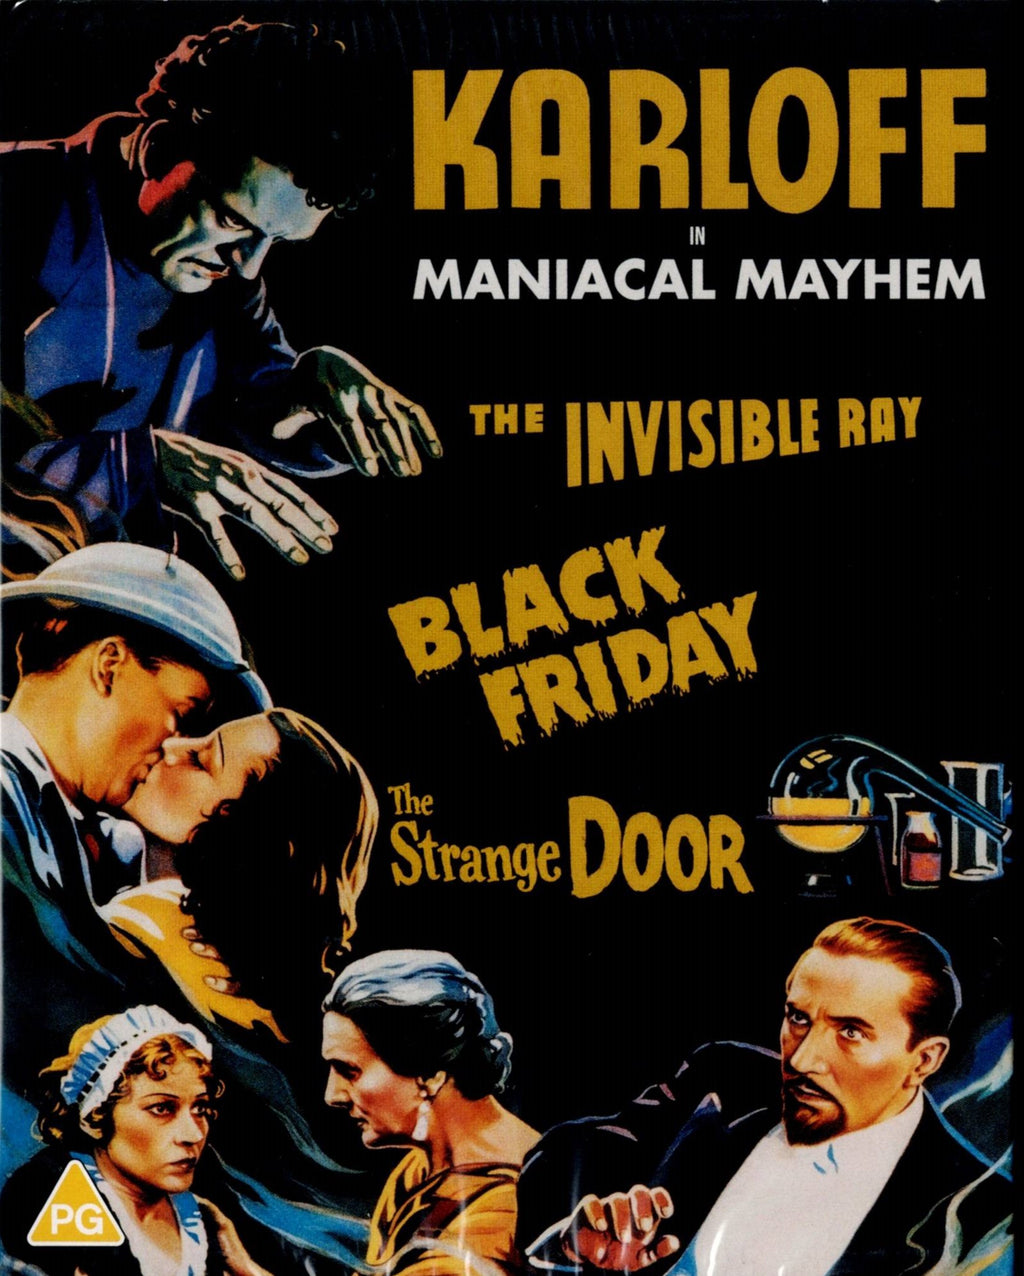 Maniacal Mayhem with Karloff (LE Slipcover Eureka UK) (Blu-Ray Region B) –  DiabolikDVD